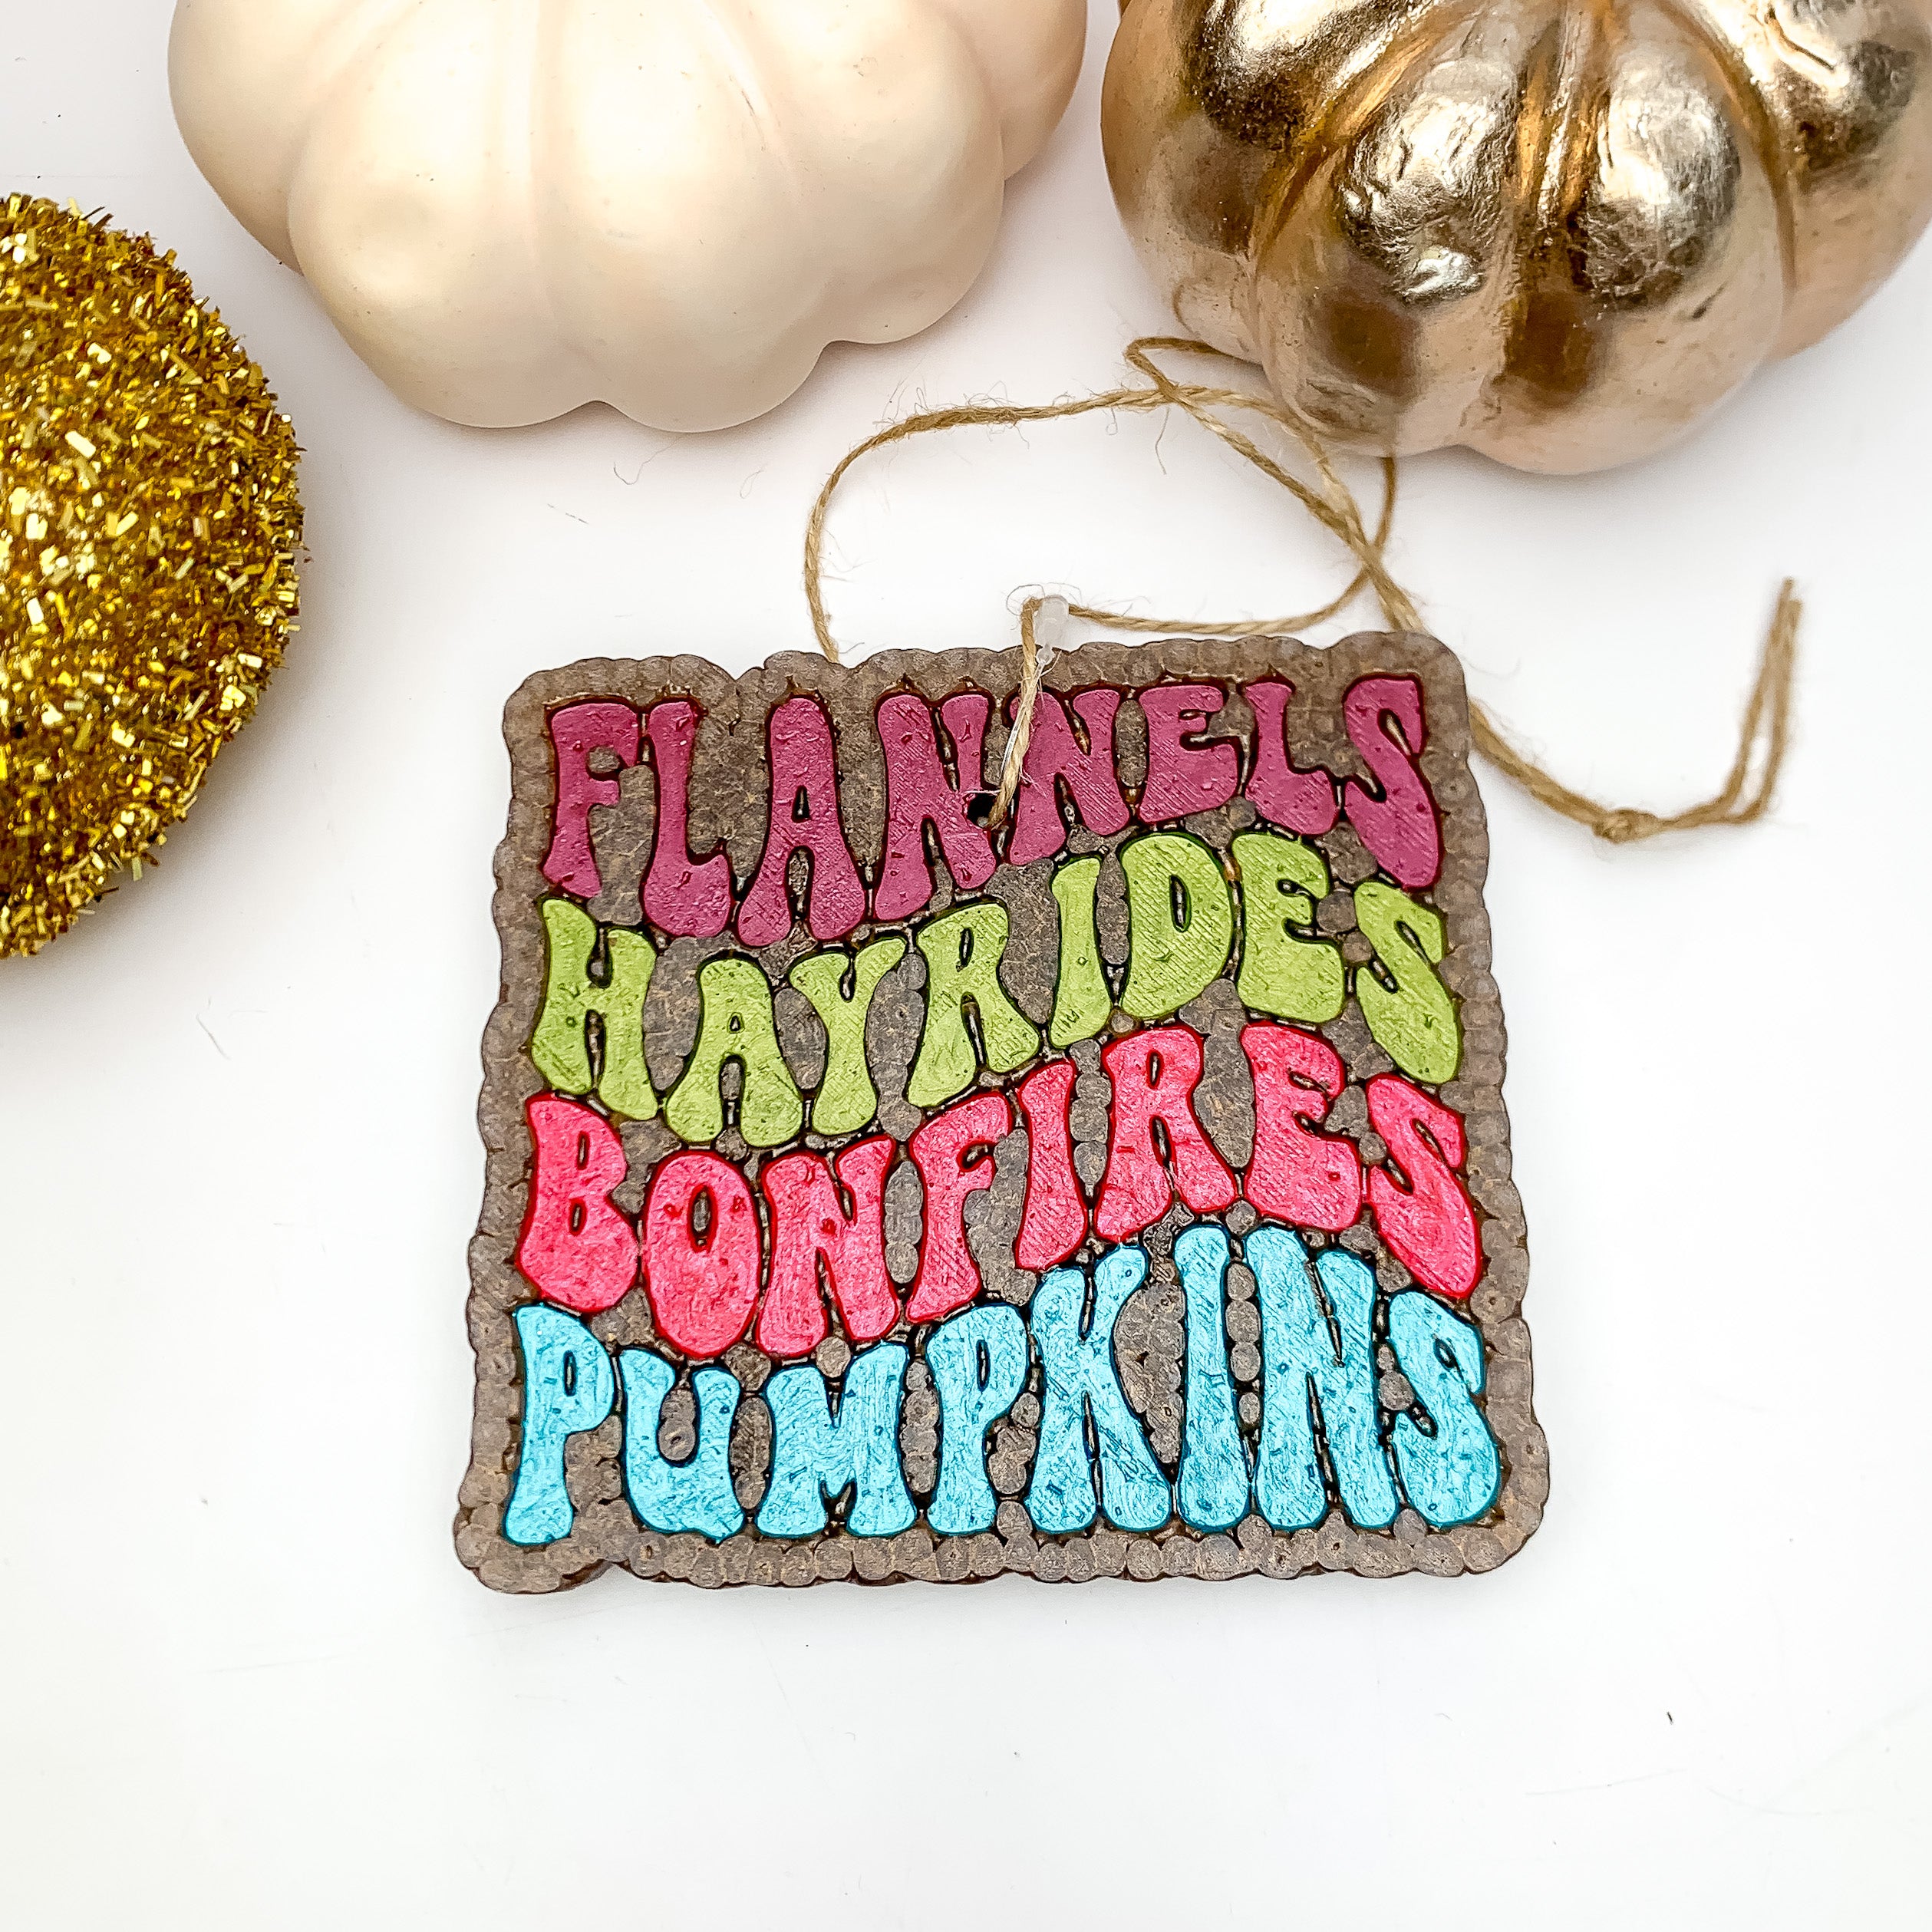 "Flannels Hayrides Bonfires Pumpkins" Freshie in Butter Pecan Waffles - Giddy Up Glamour Boutique